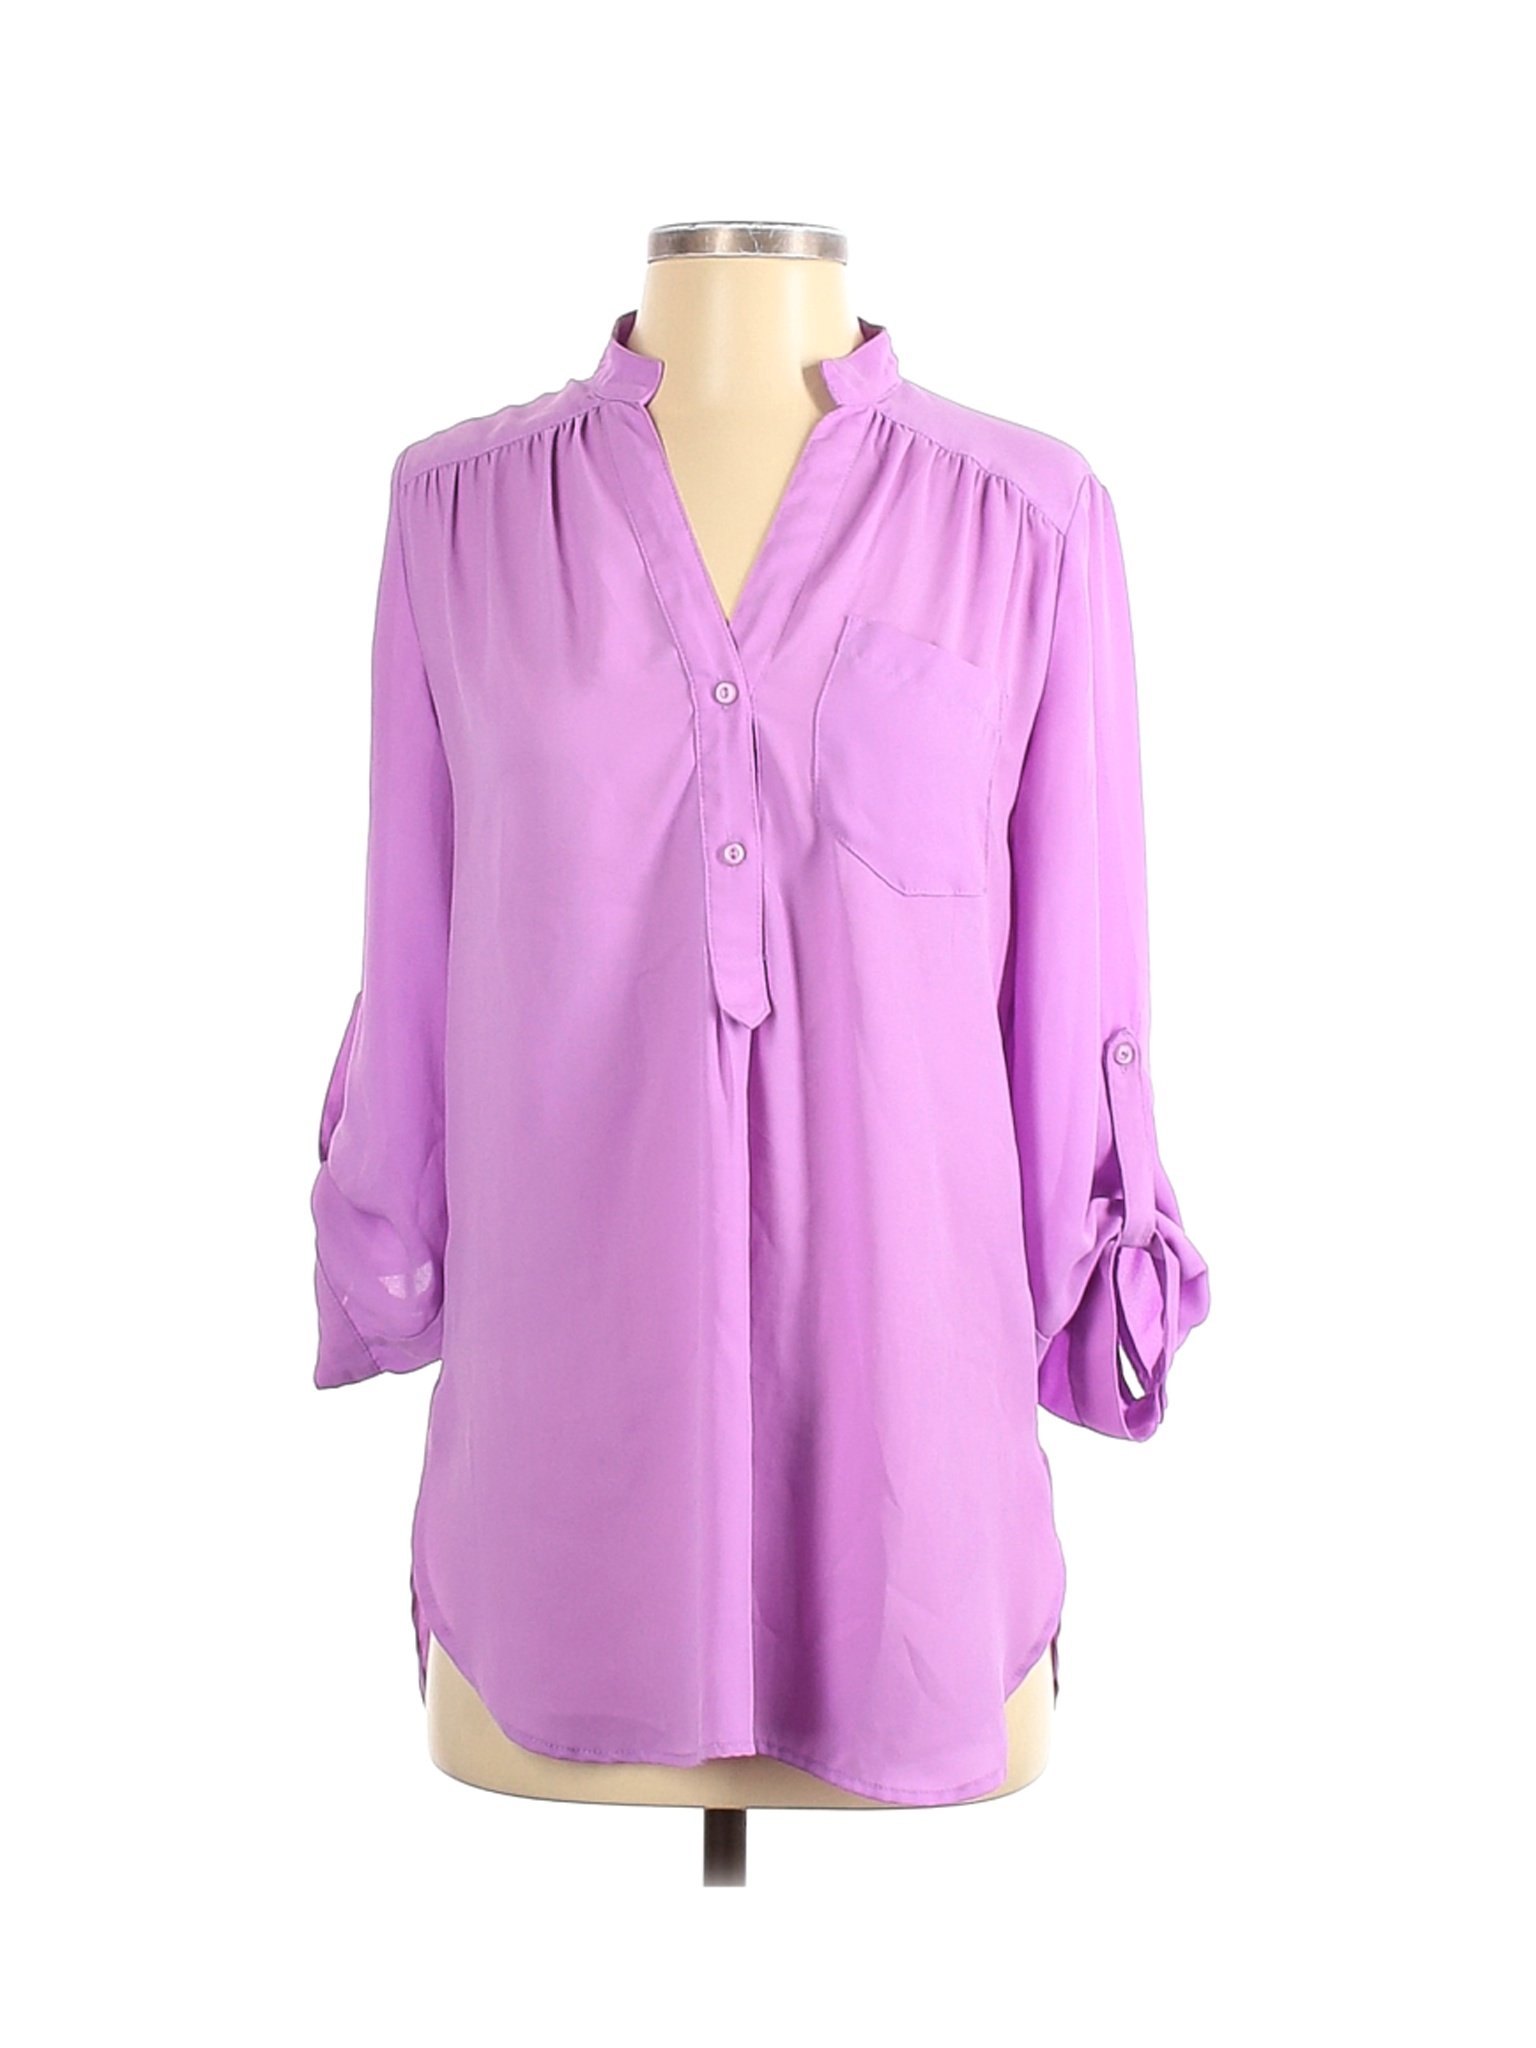 41Hawthorn Women Purple 3/4 Sleeve Blouse S | eBay